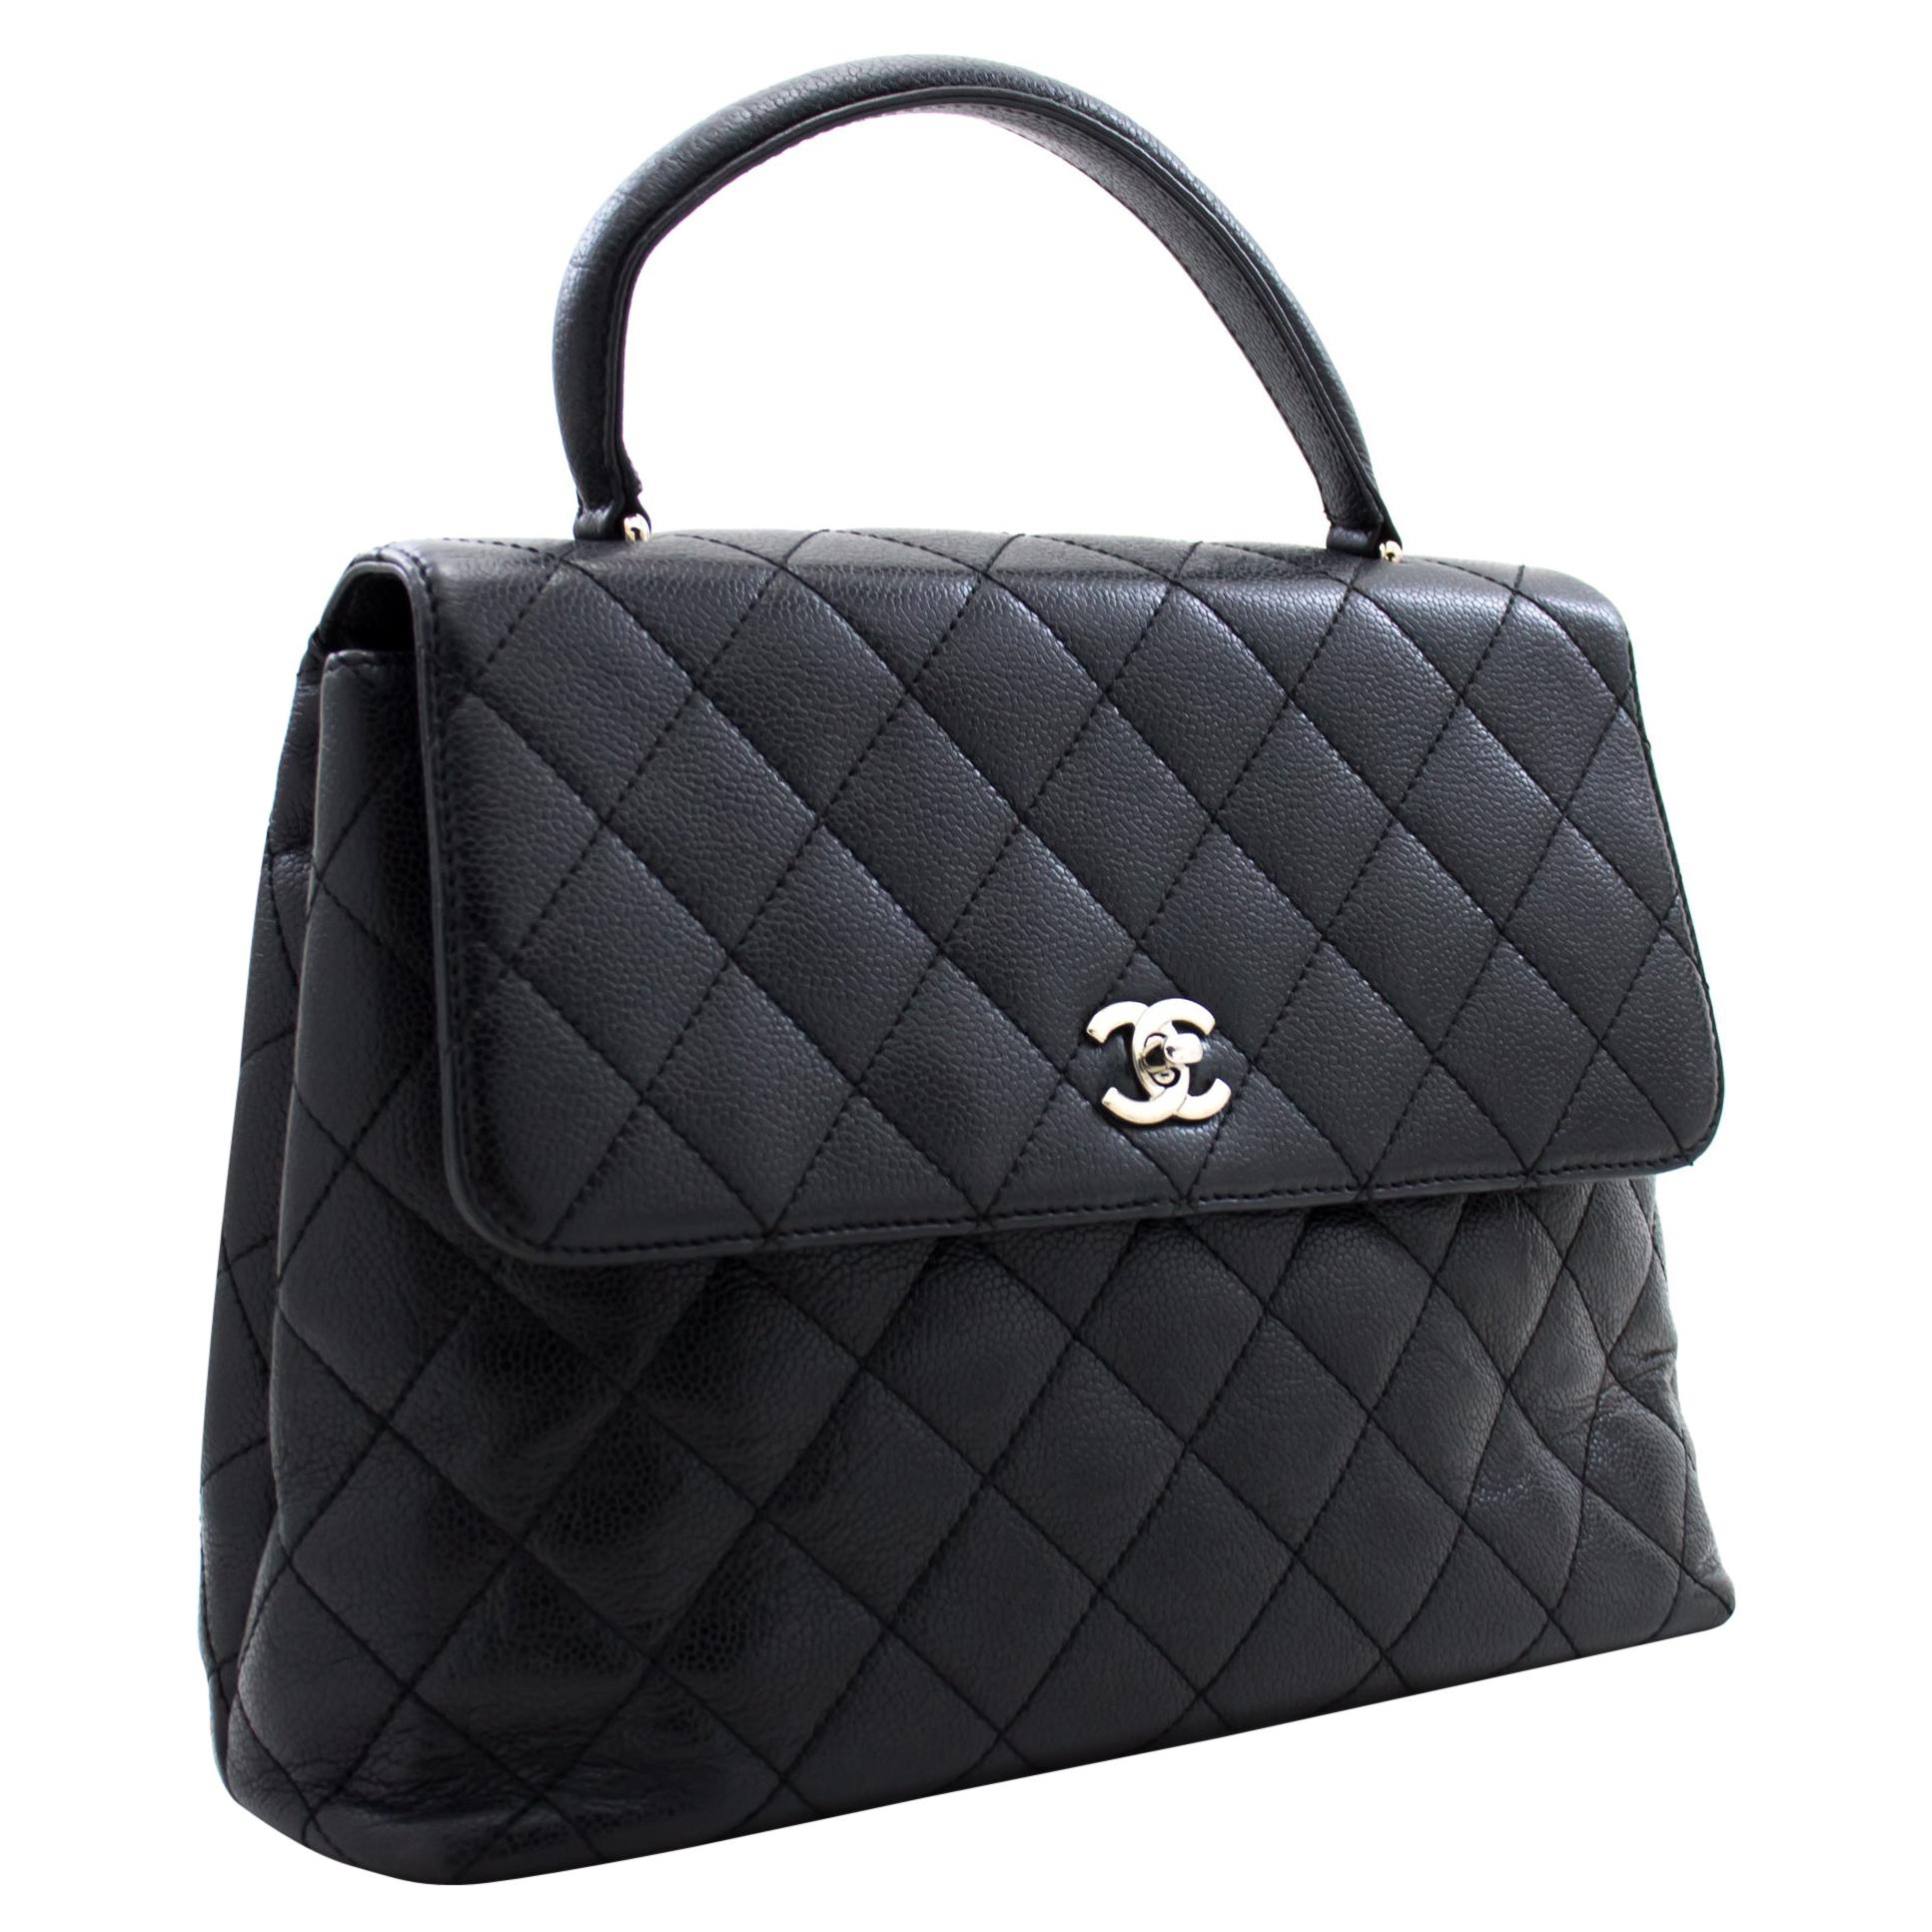 CHANEL Kelly Caviar Handbag Bag Black Flap Leather Silver Hardware